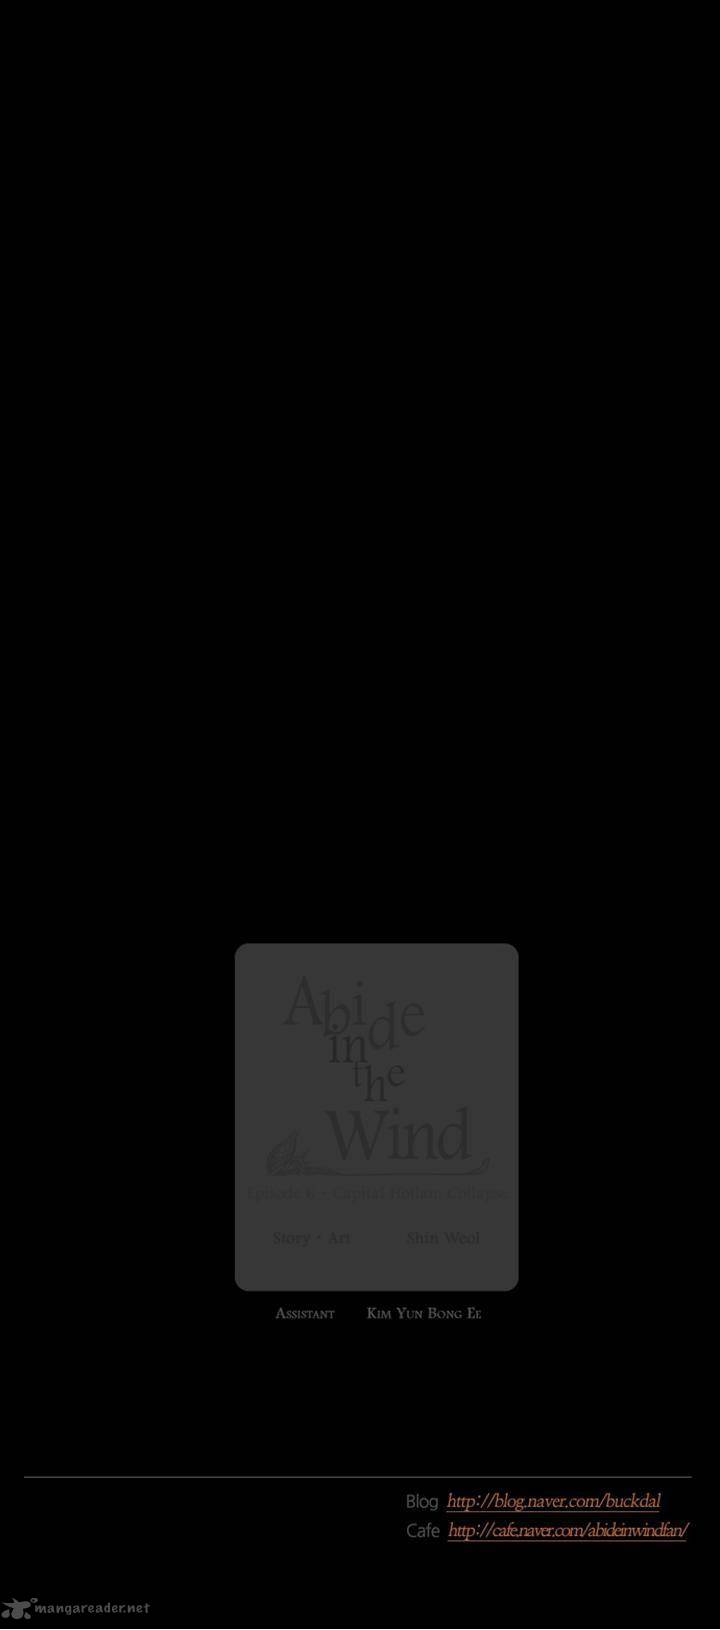 abide_in_the_wind_108_21